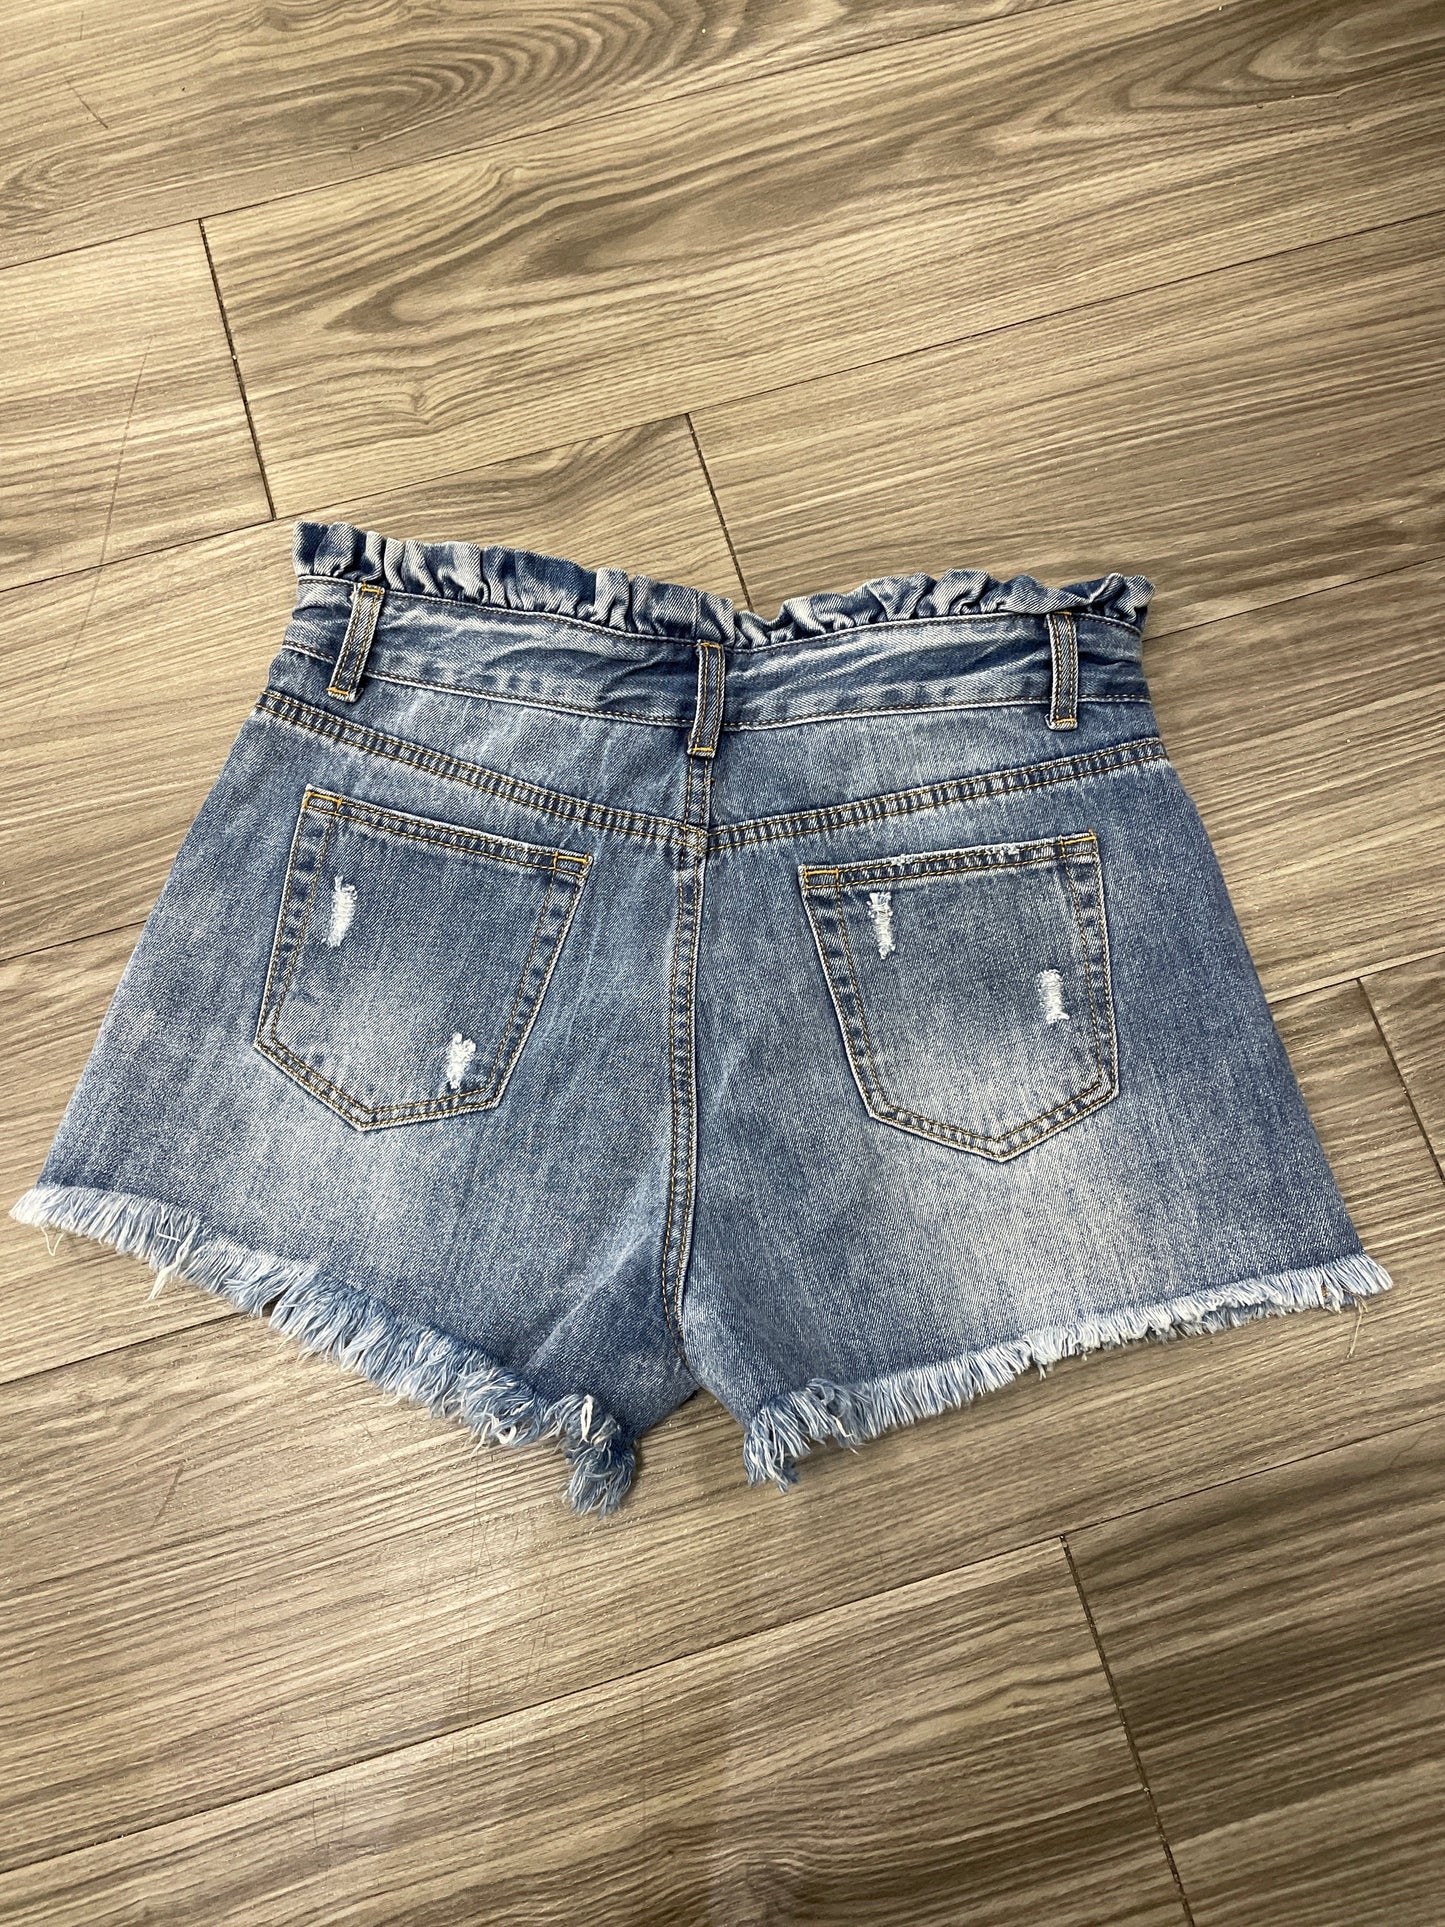 Shorts By Hayden La  Size: M